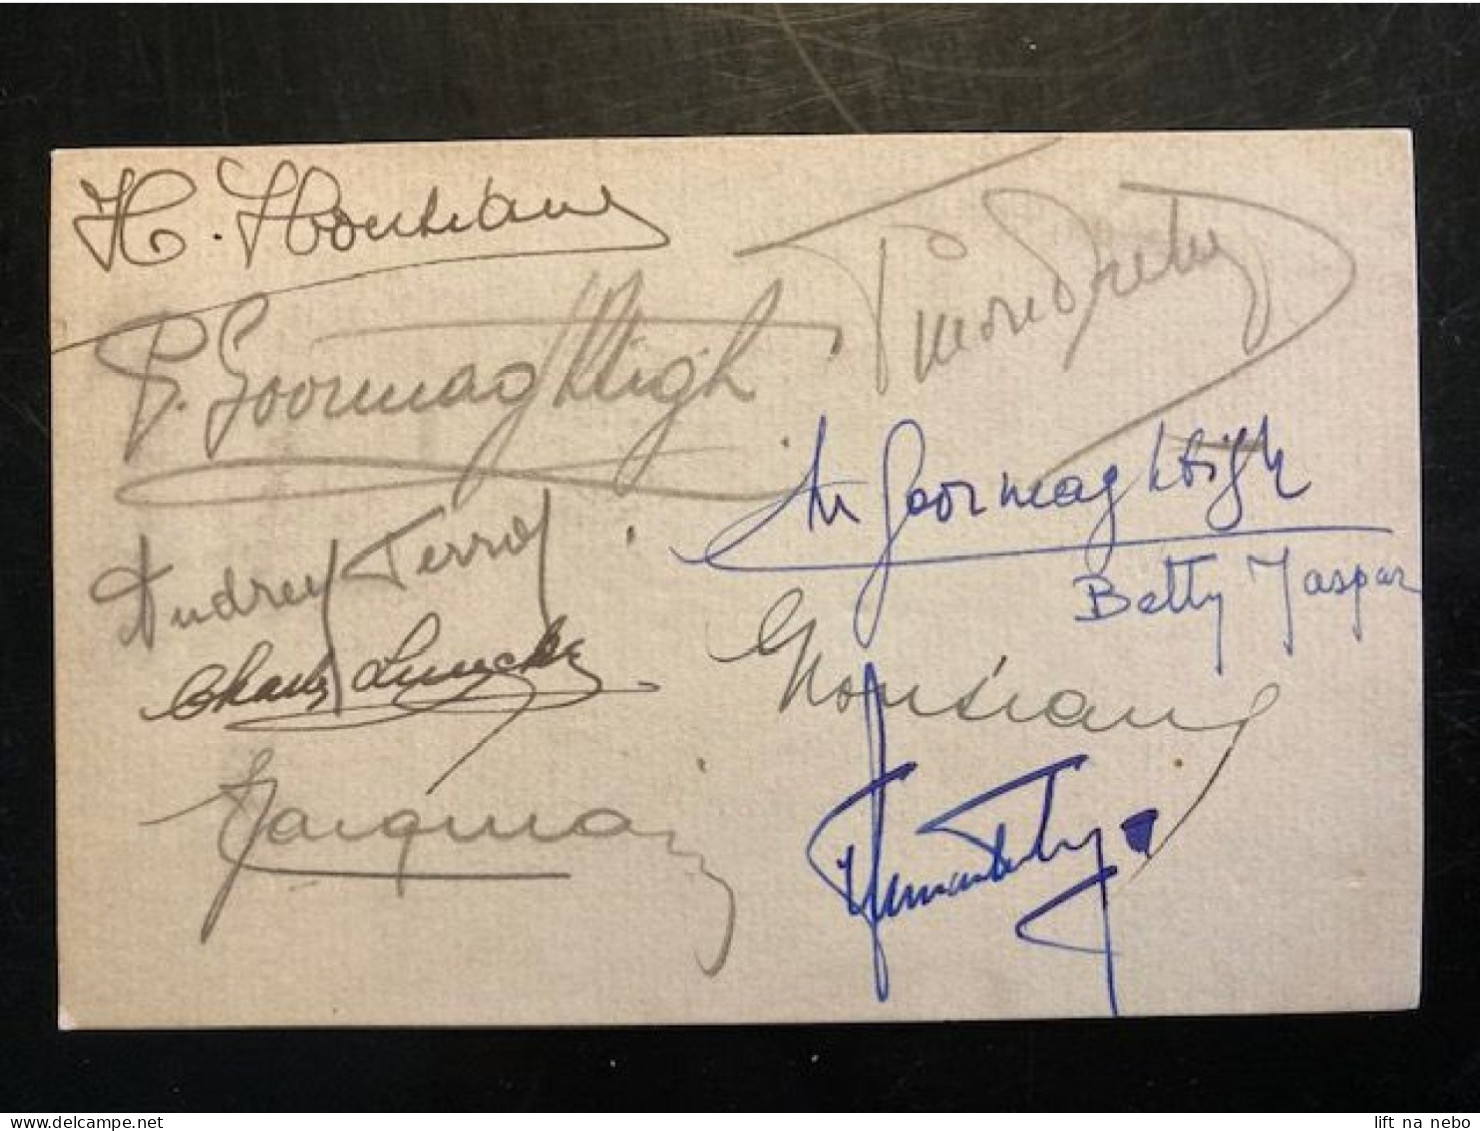 Tract Presse Clandestine Résistance Belge WWII WW2 'Xmas 1941 Menu' Signatures Au Dos - Documentos